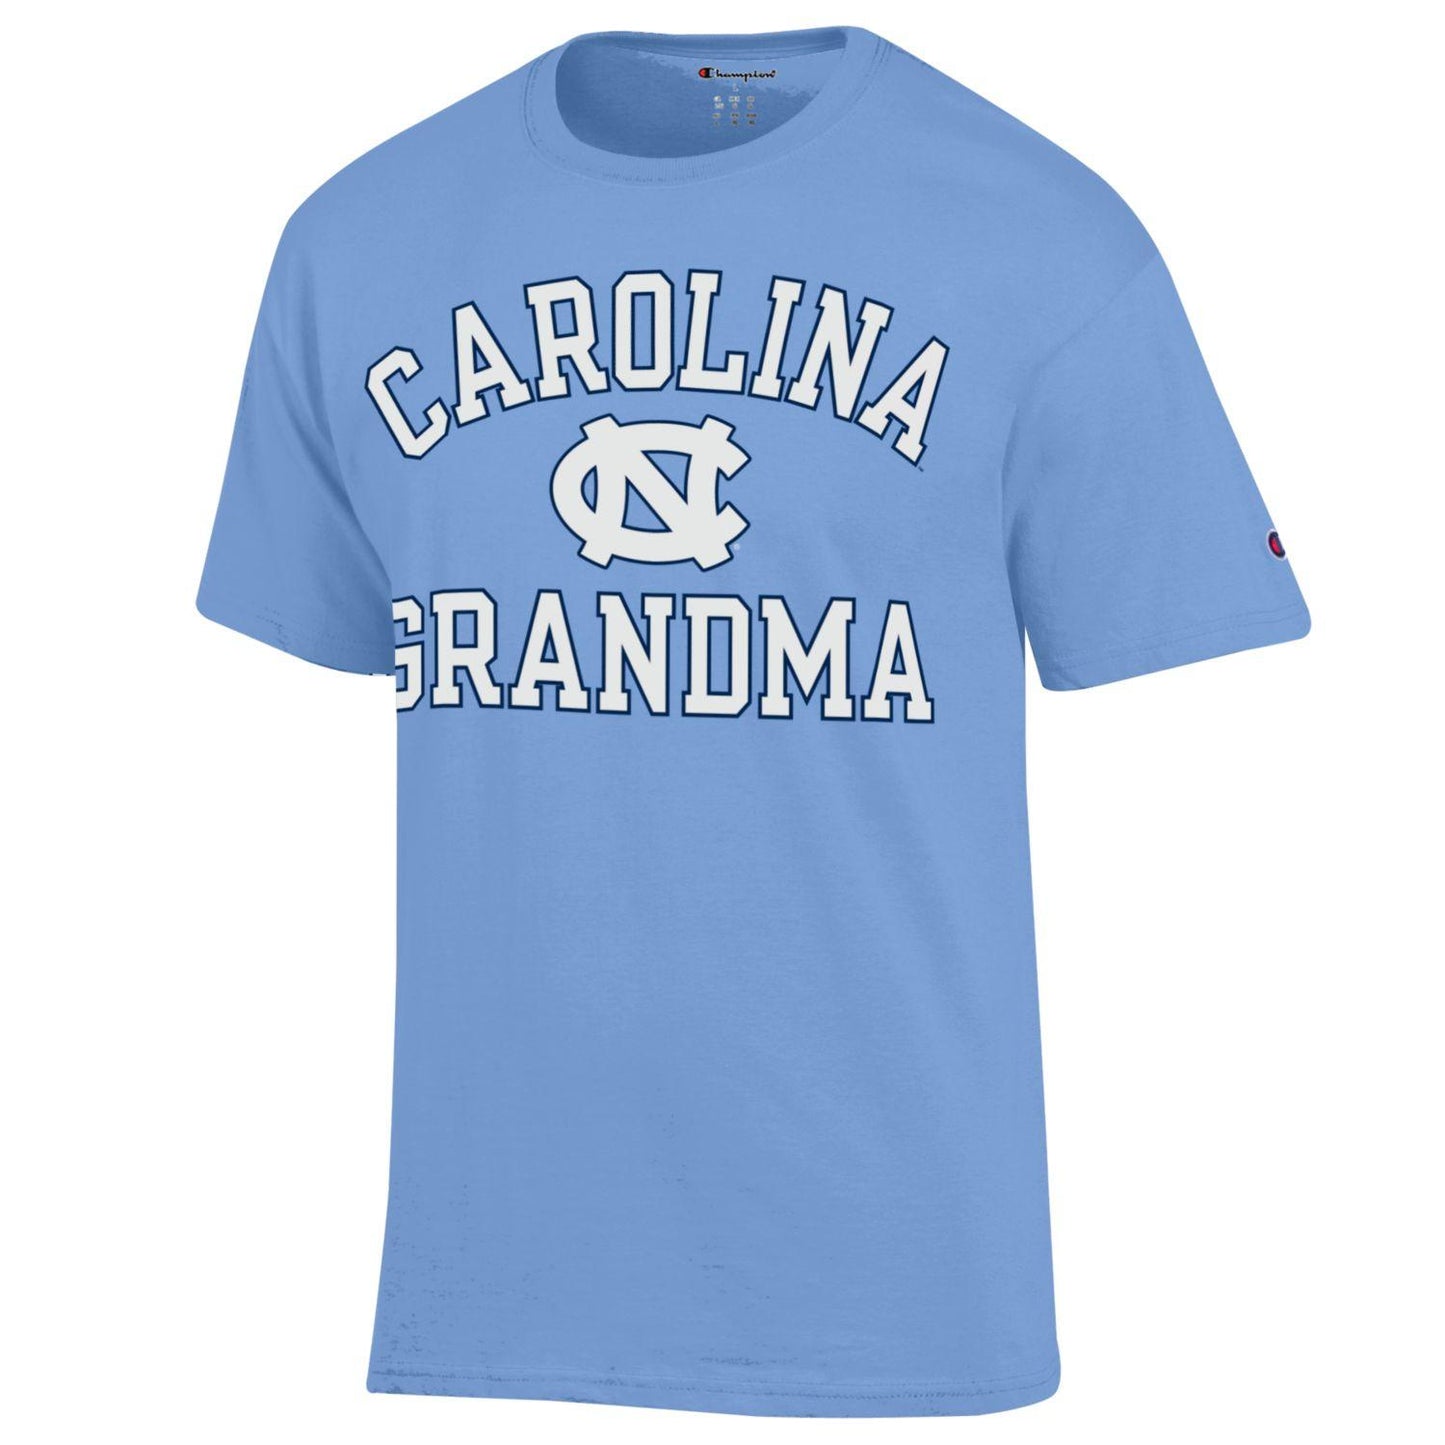 Carolina Grandma T-Shirt in UNC Blue by Champion